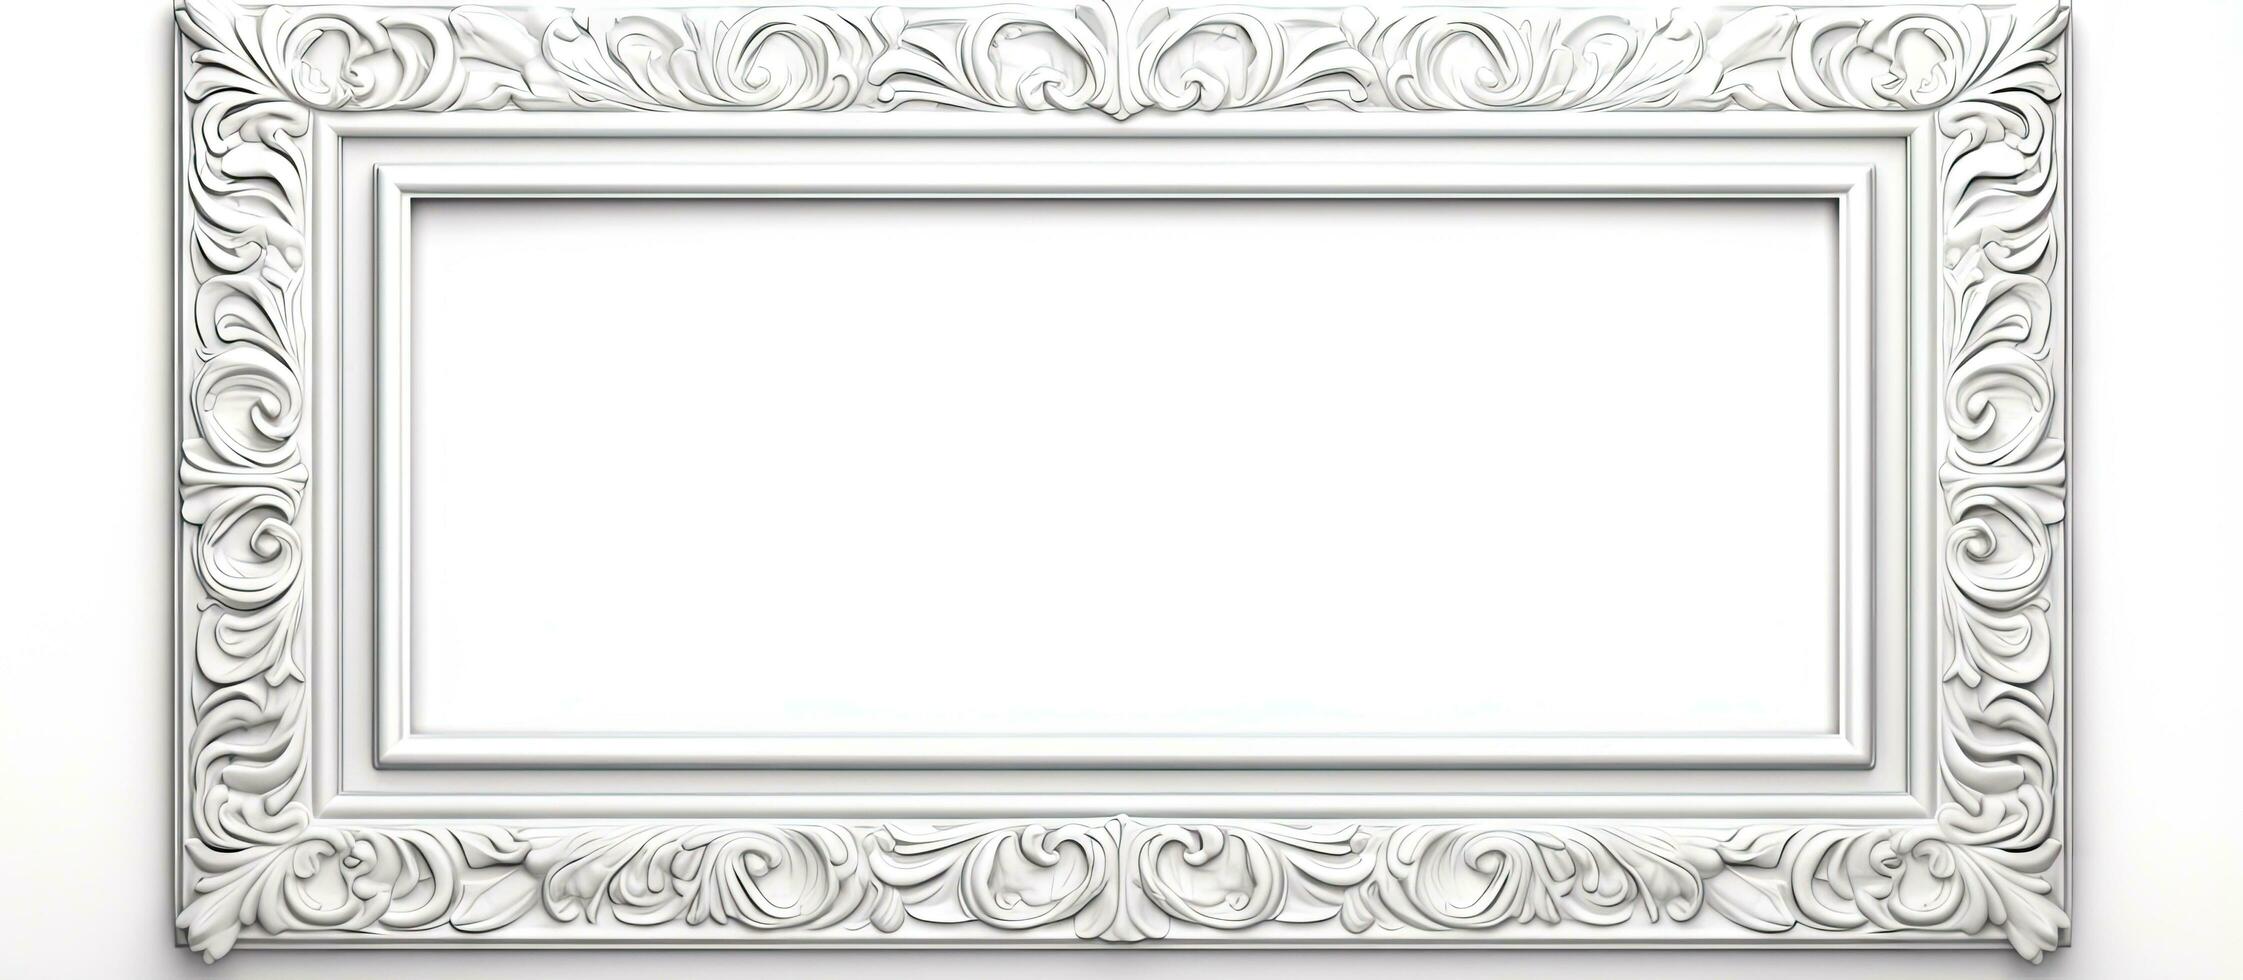 White background illustration with frame isolated photo